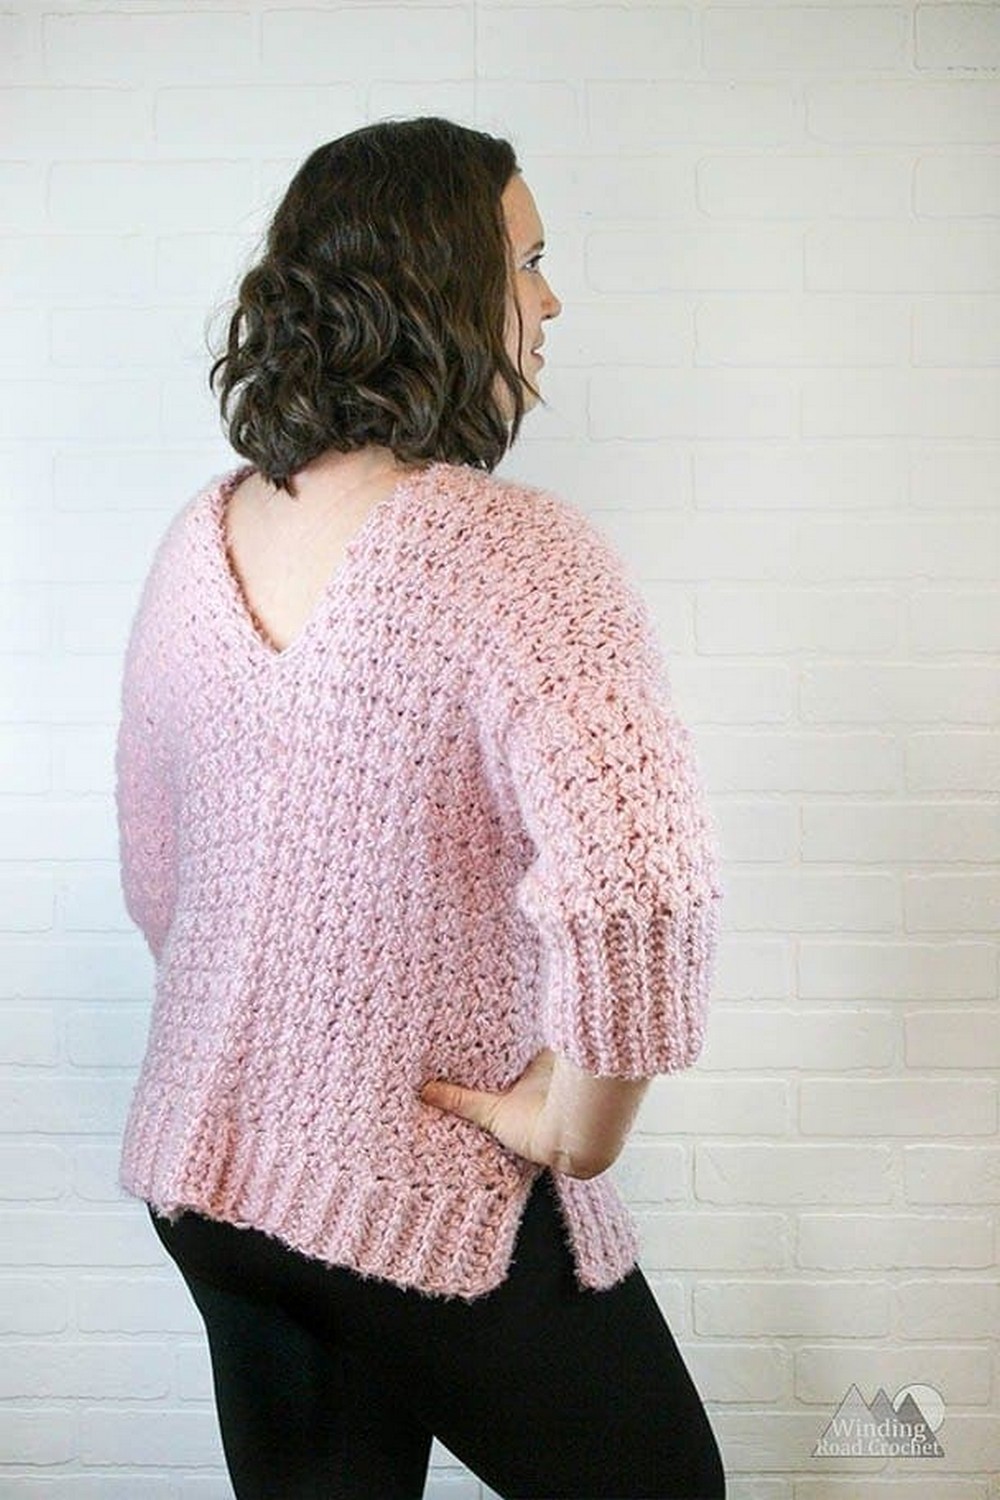 Free crochet pattern for a heart-shaped sweater